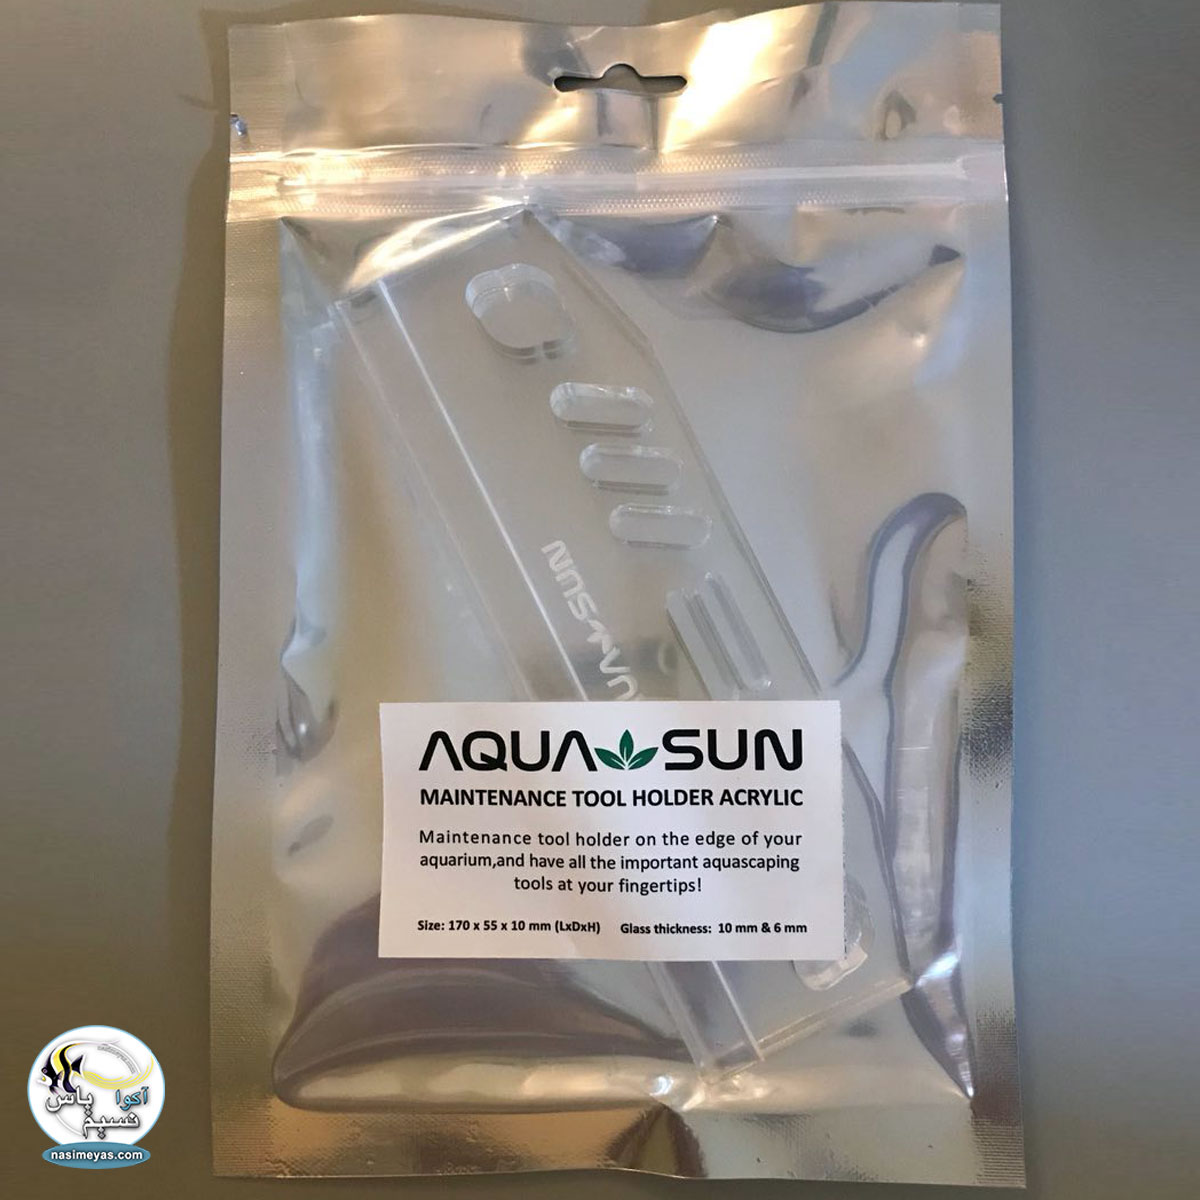 aquasun maintenance tool holder acrylic